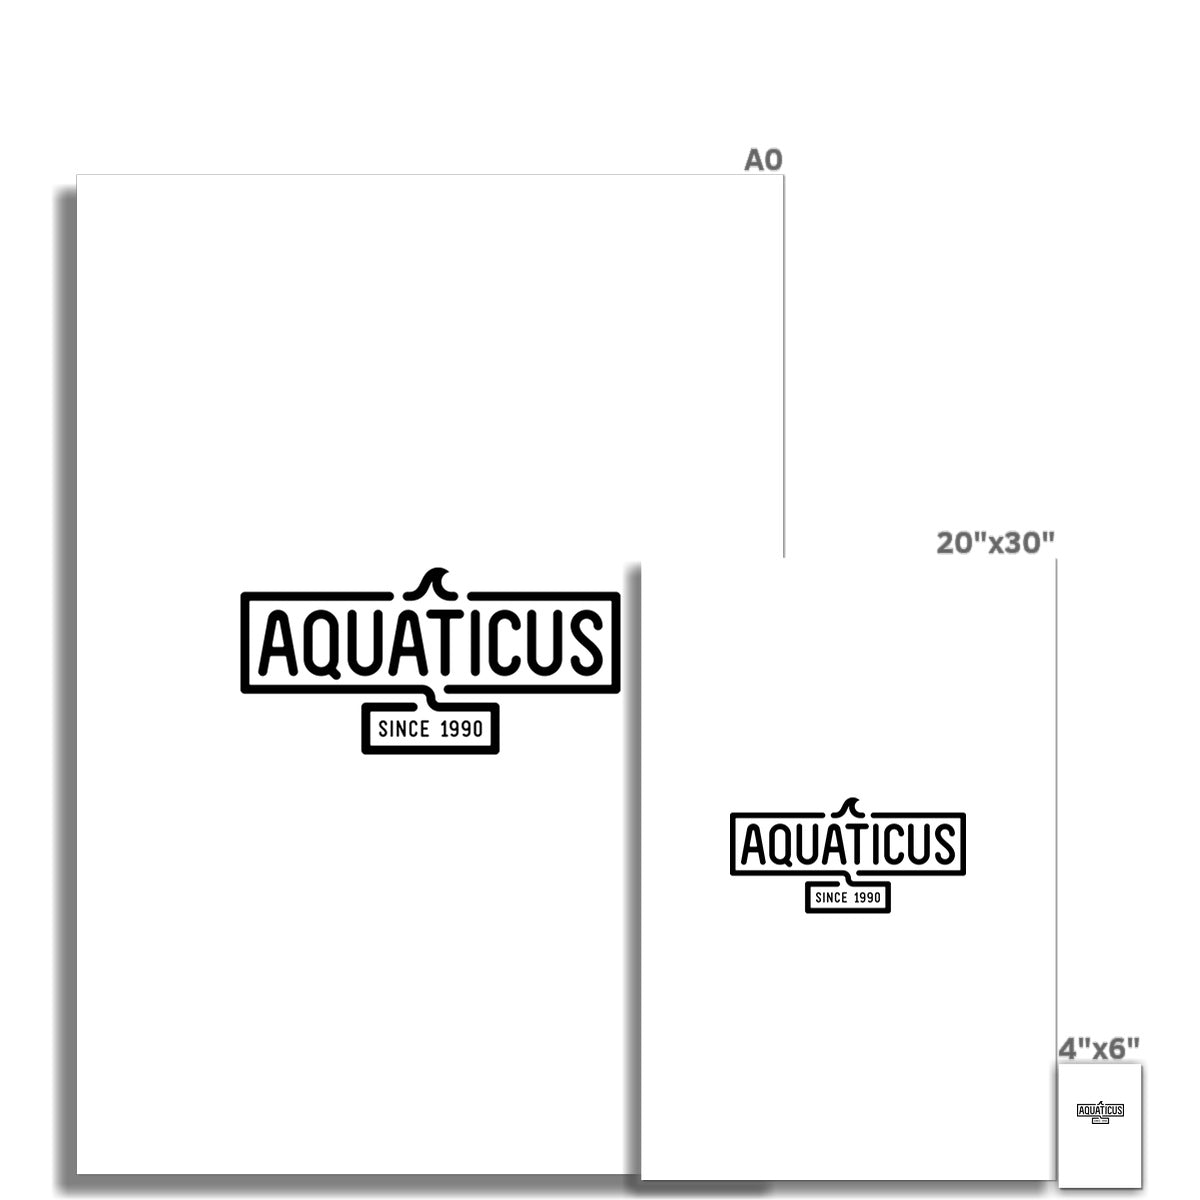 AQUA - 01- Aquaticus - Lona Eco Rolada